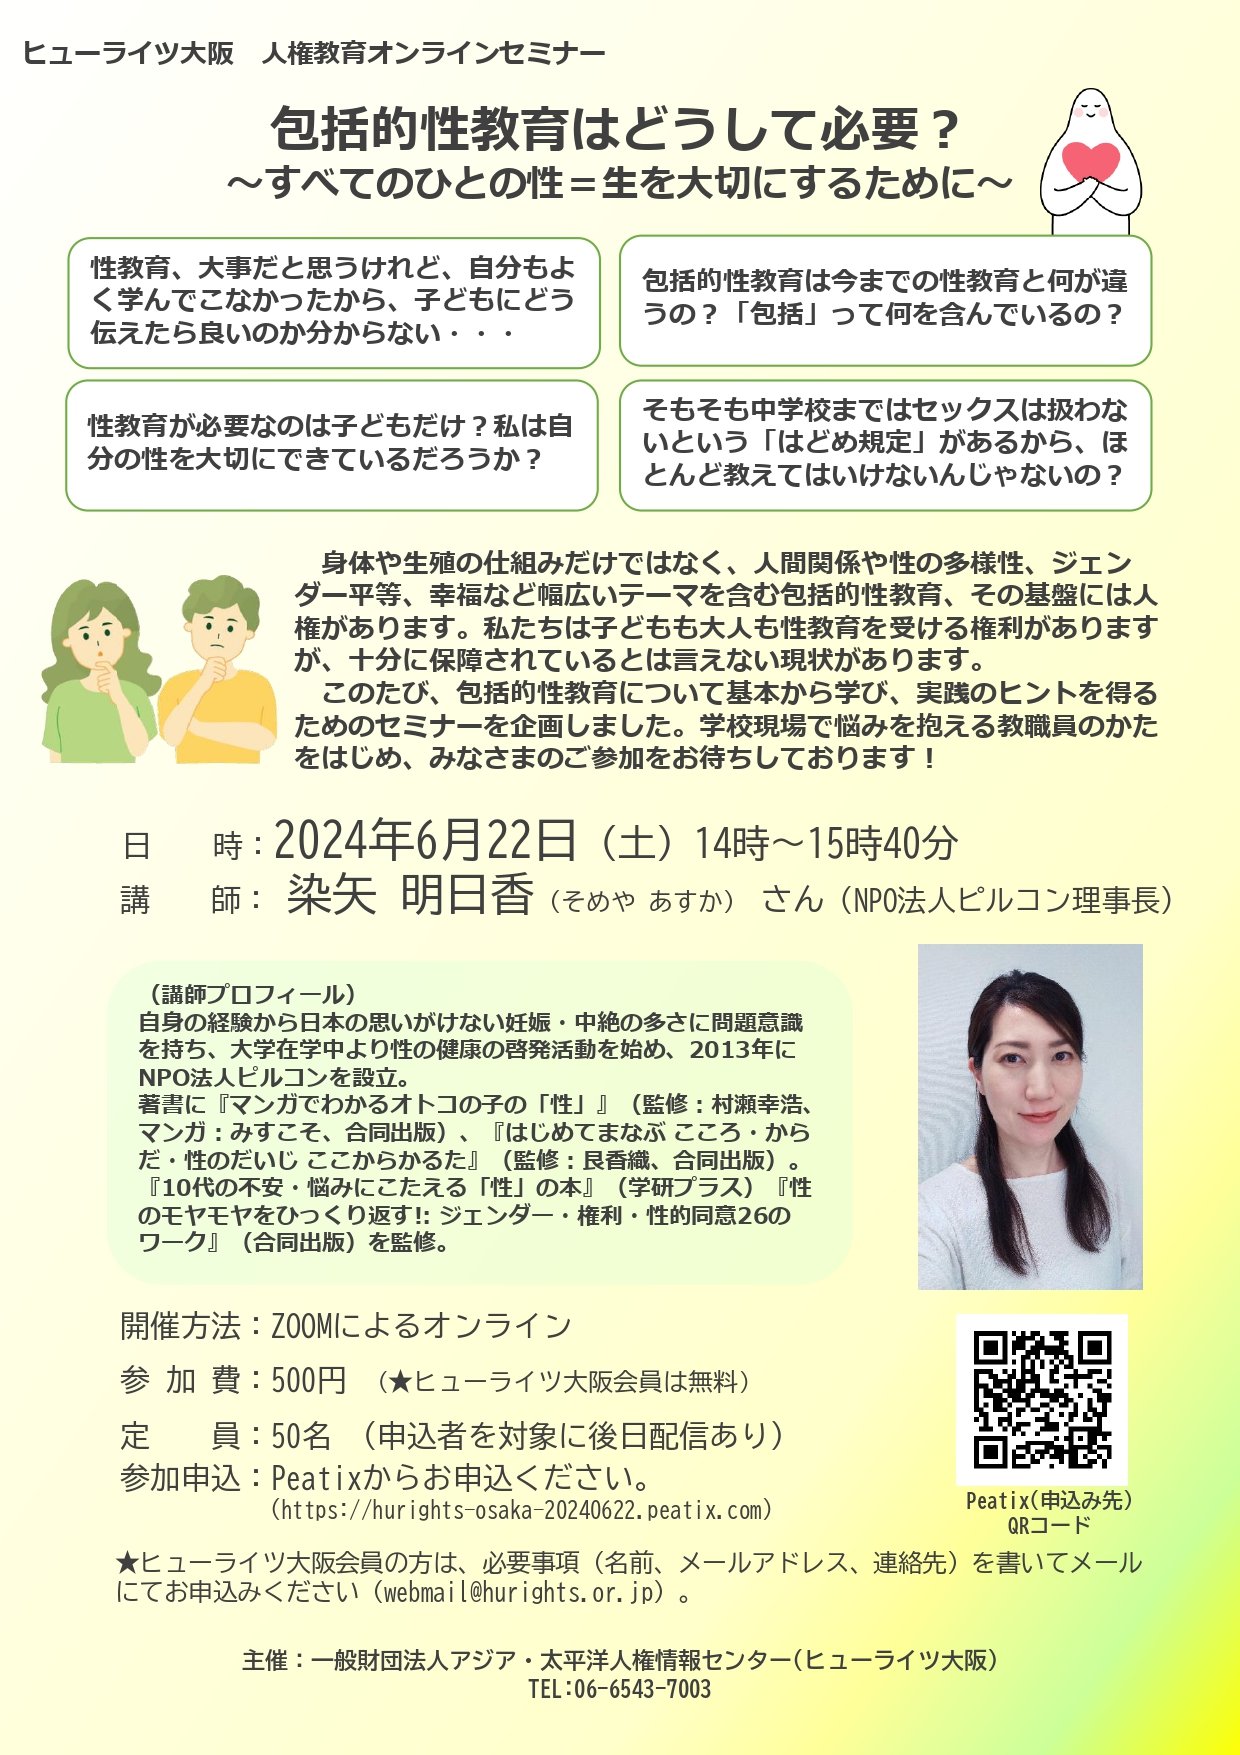 https://www.hurights.or.jp/japan/event_seminar/HRE_seminer_20240622.jpg